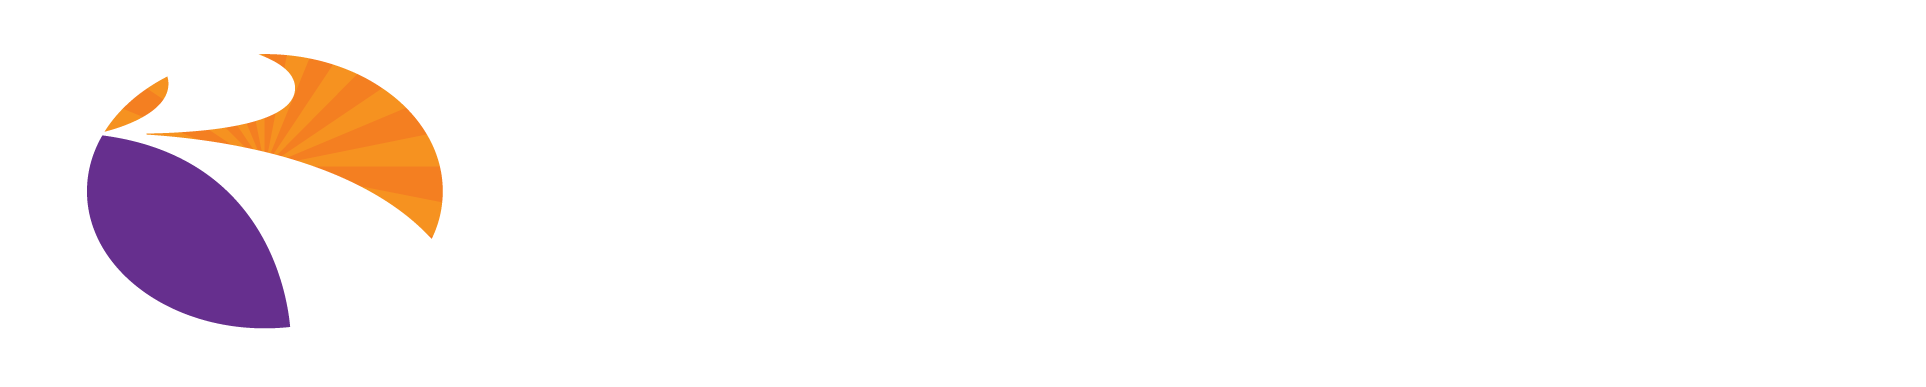 Revealing Journey - Christian Teaching & Travel Ministry